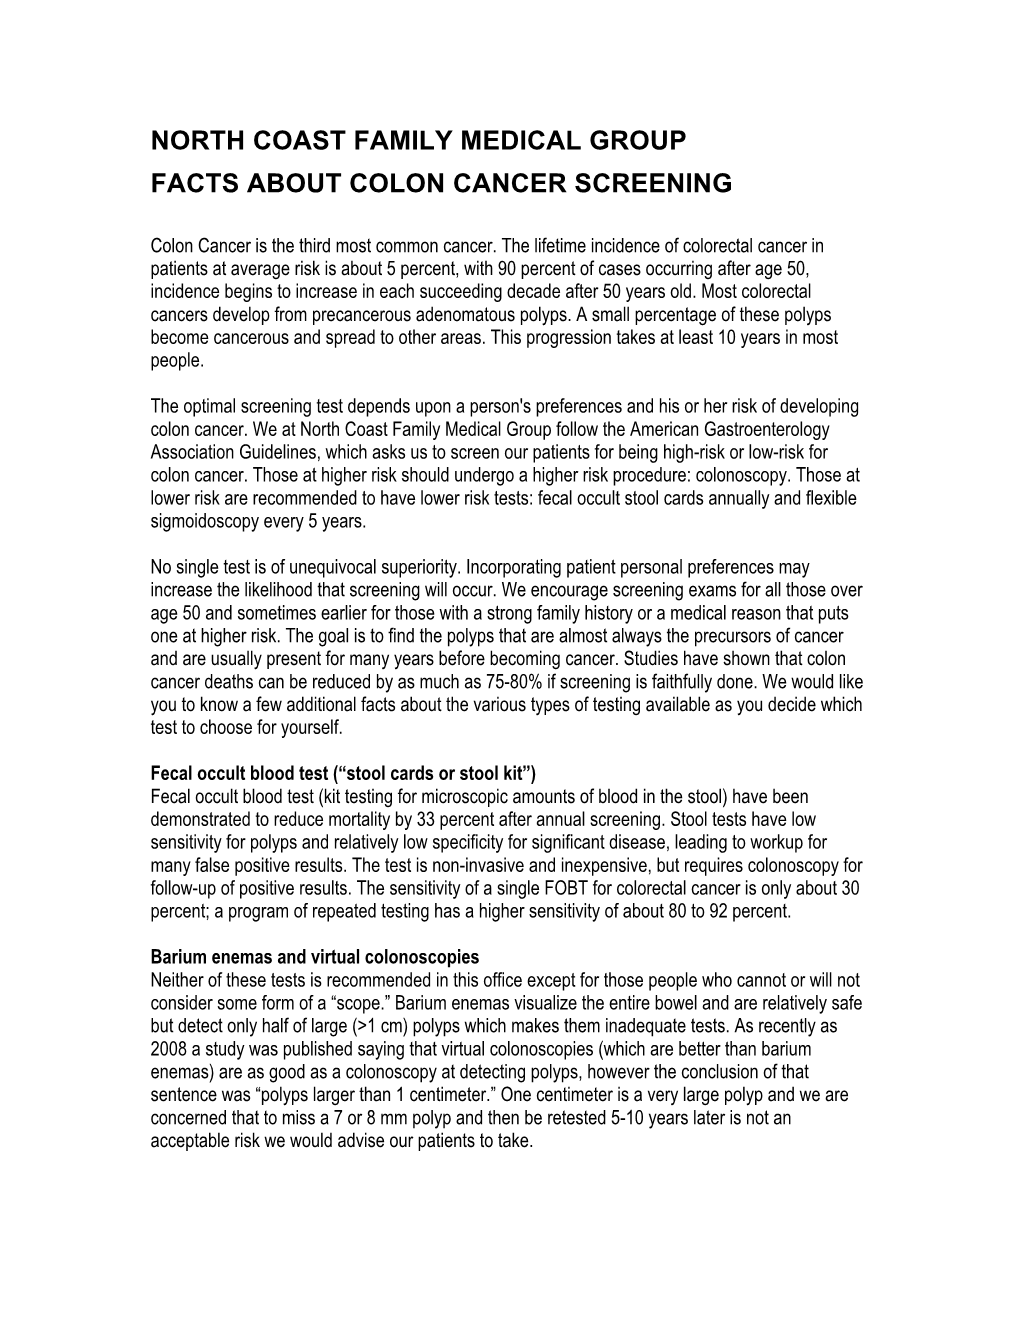 Colon Cancer Screening